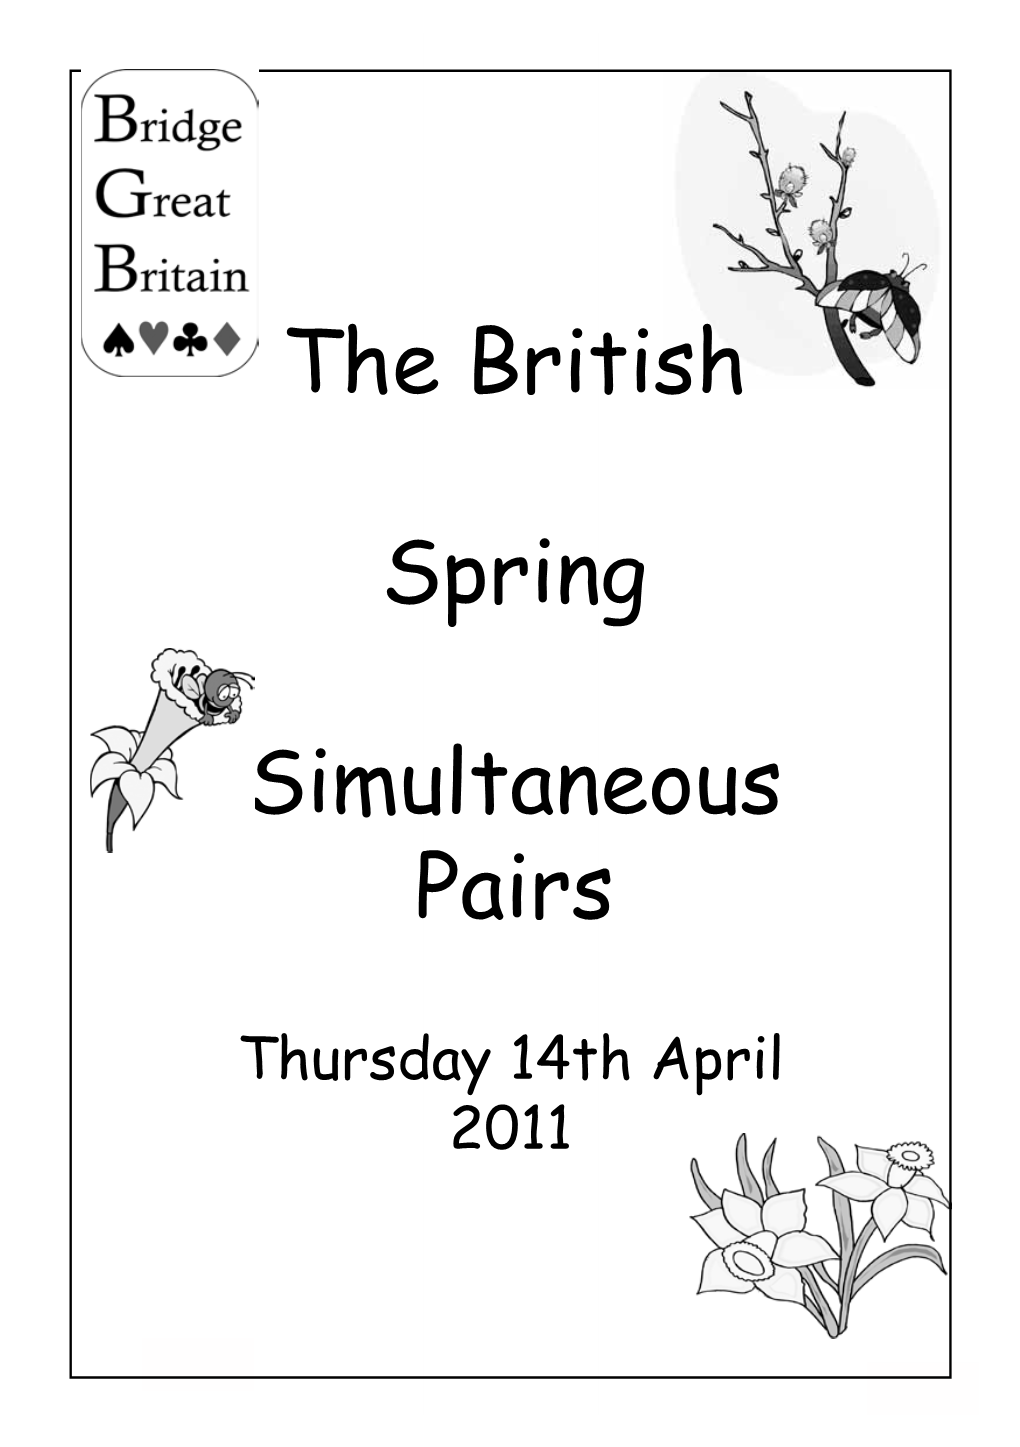 The British Spring Simultaneous Pairs